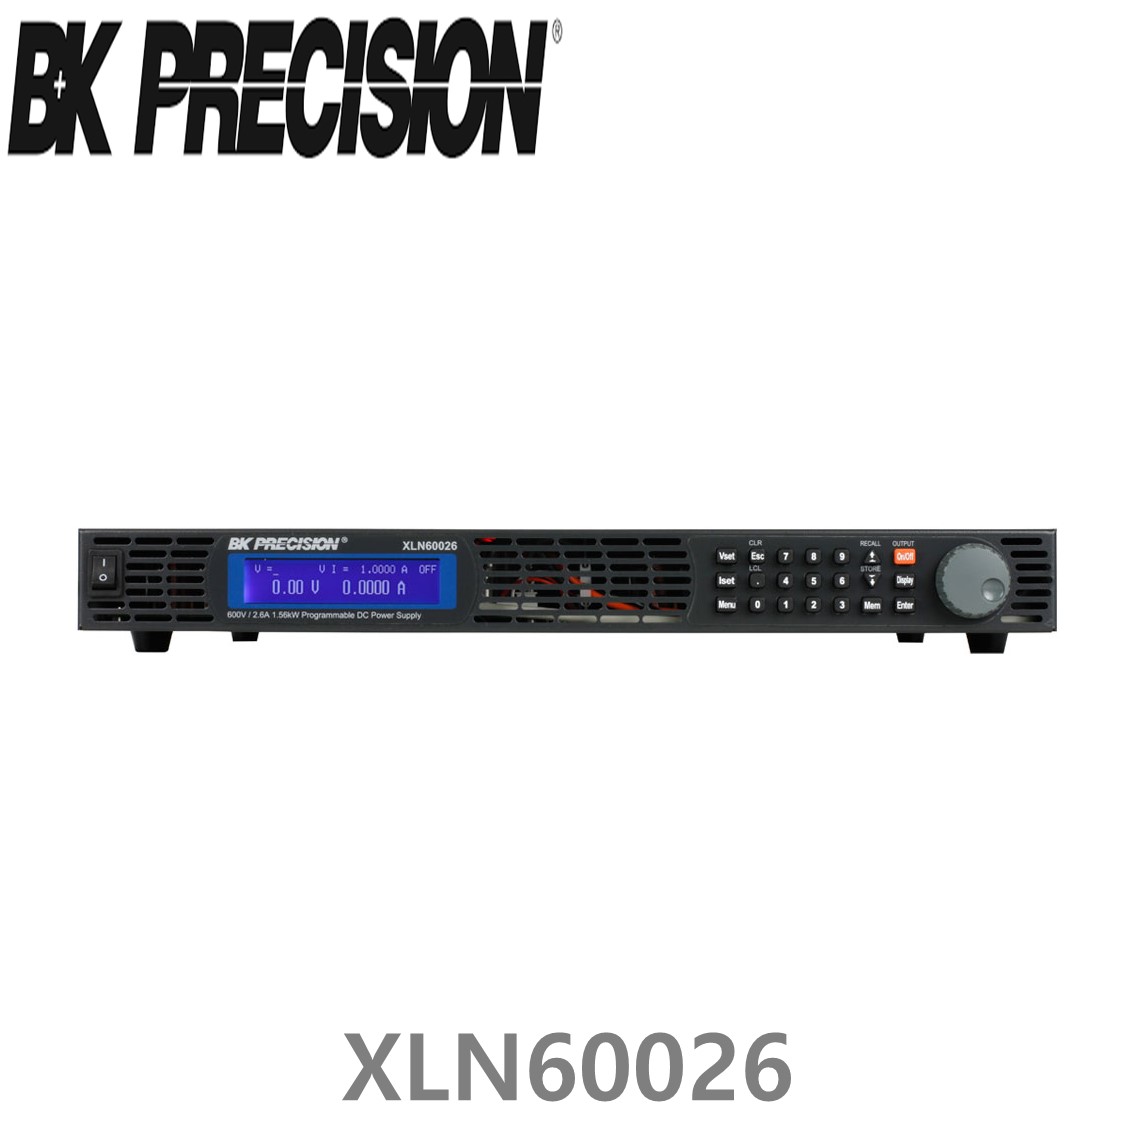 [ BK PRECISION ] BK XLN60026, 600V/2.6A(1560W), Programmable DC Power Supply, 프로그래머블 DC 전원공급기, B&K XLN60026